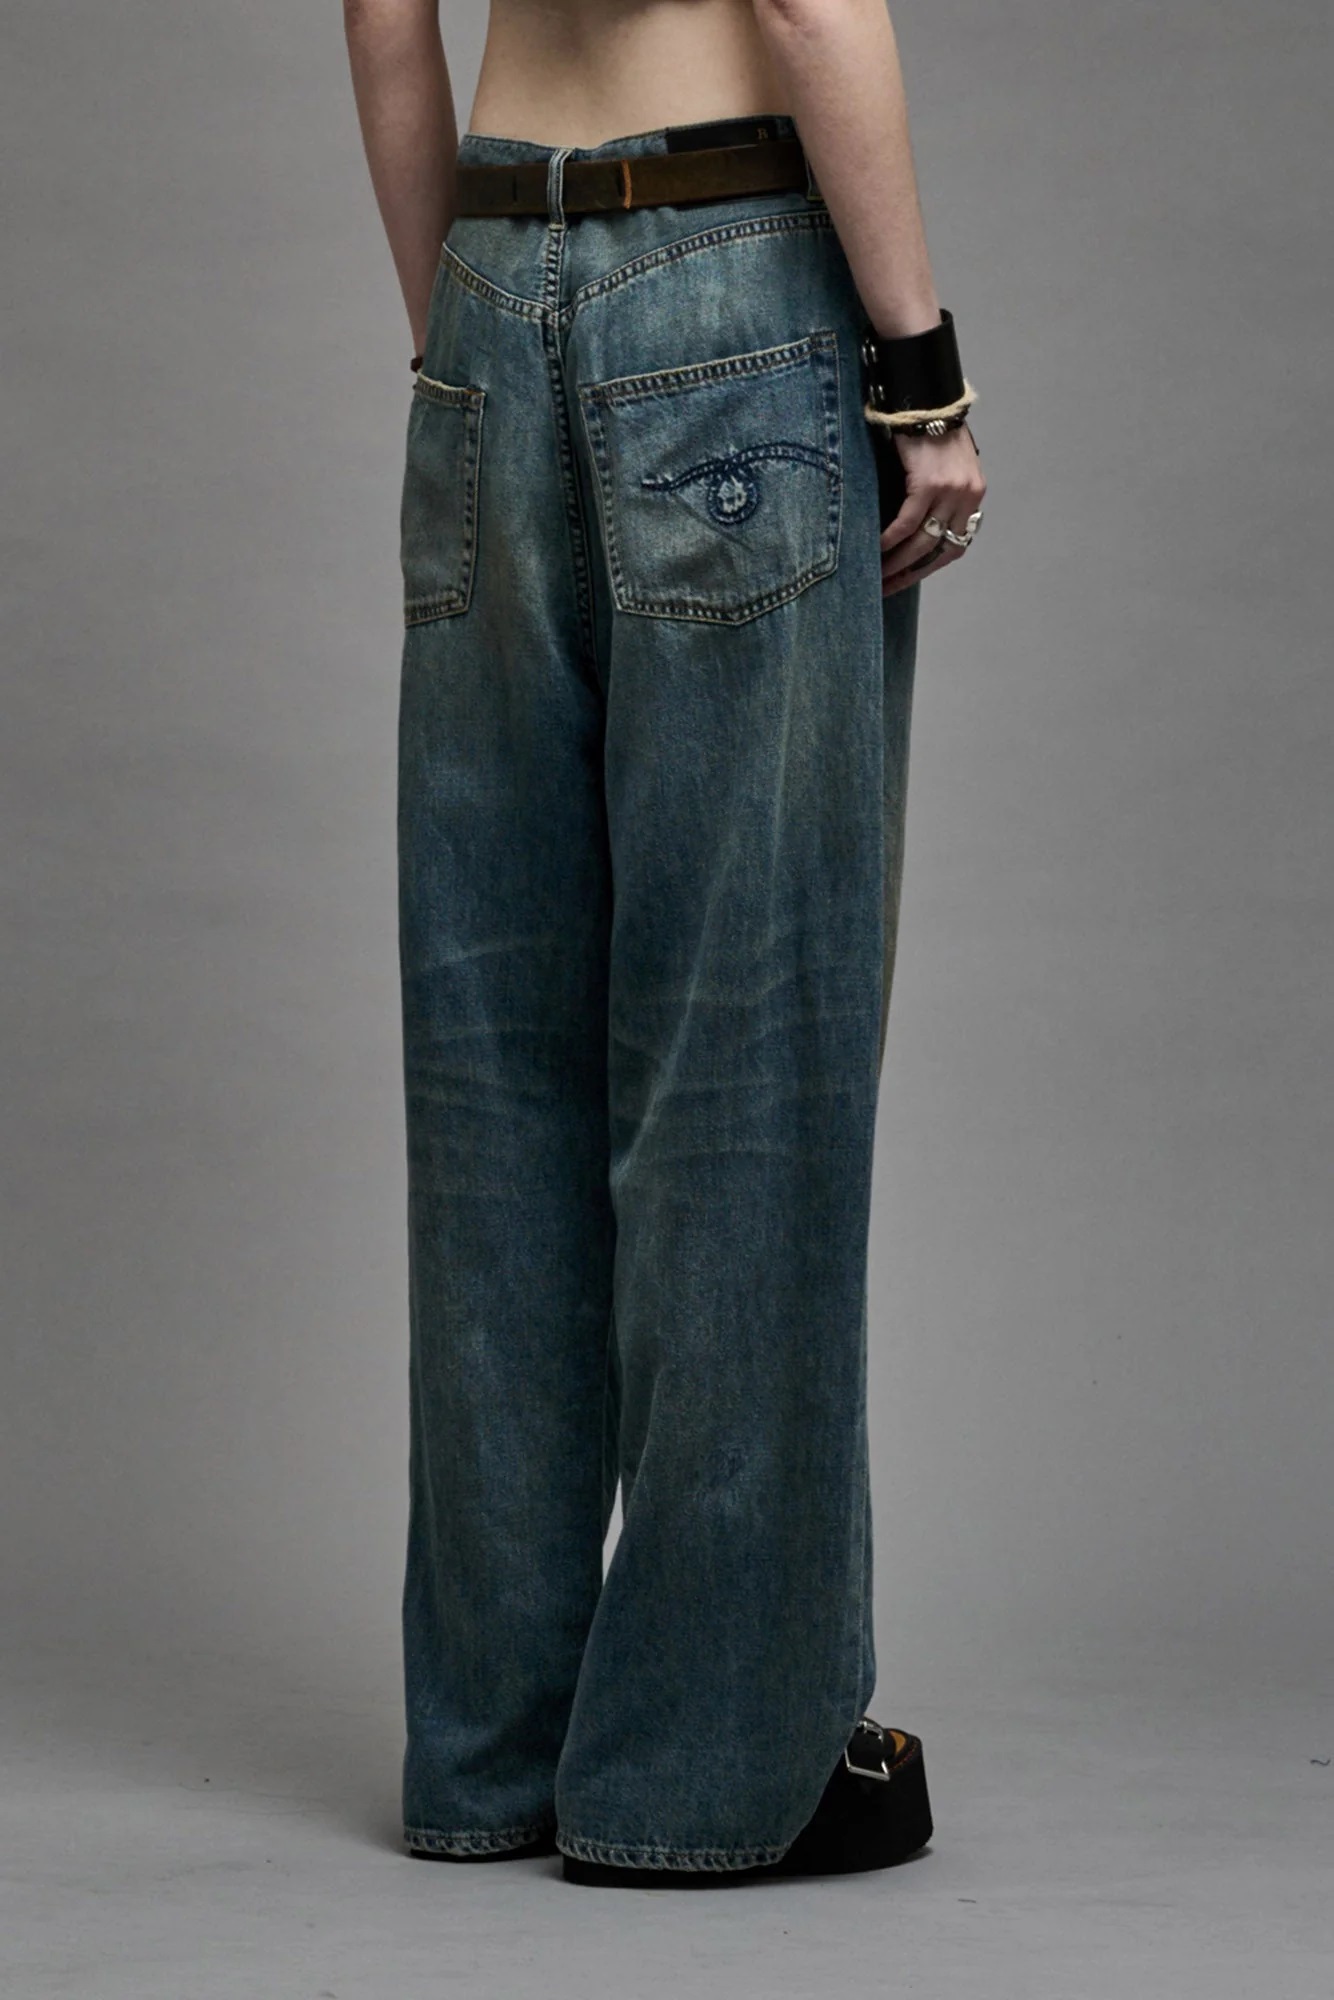 R13 Boyfriend Venti Jeans in Weber Linen Indigo 27